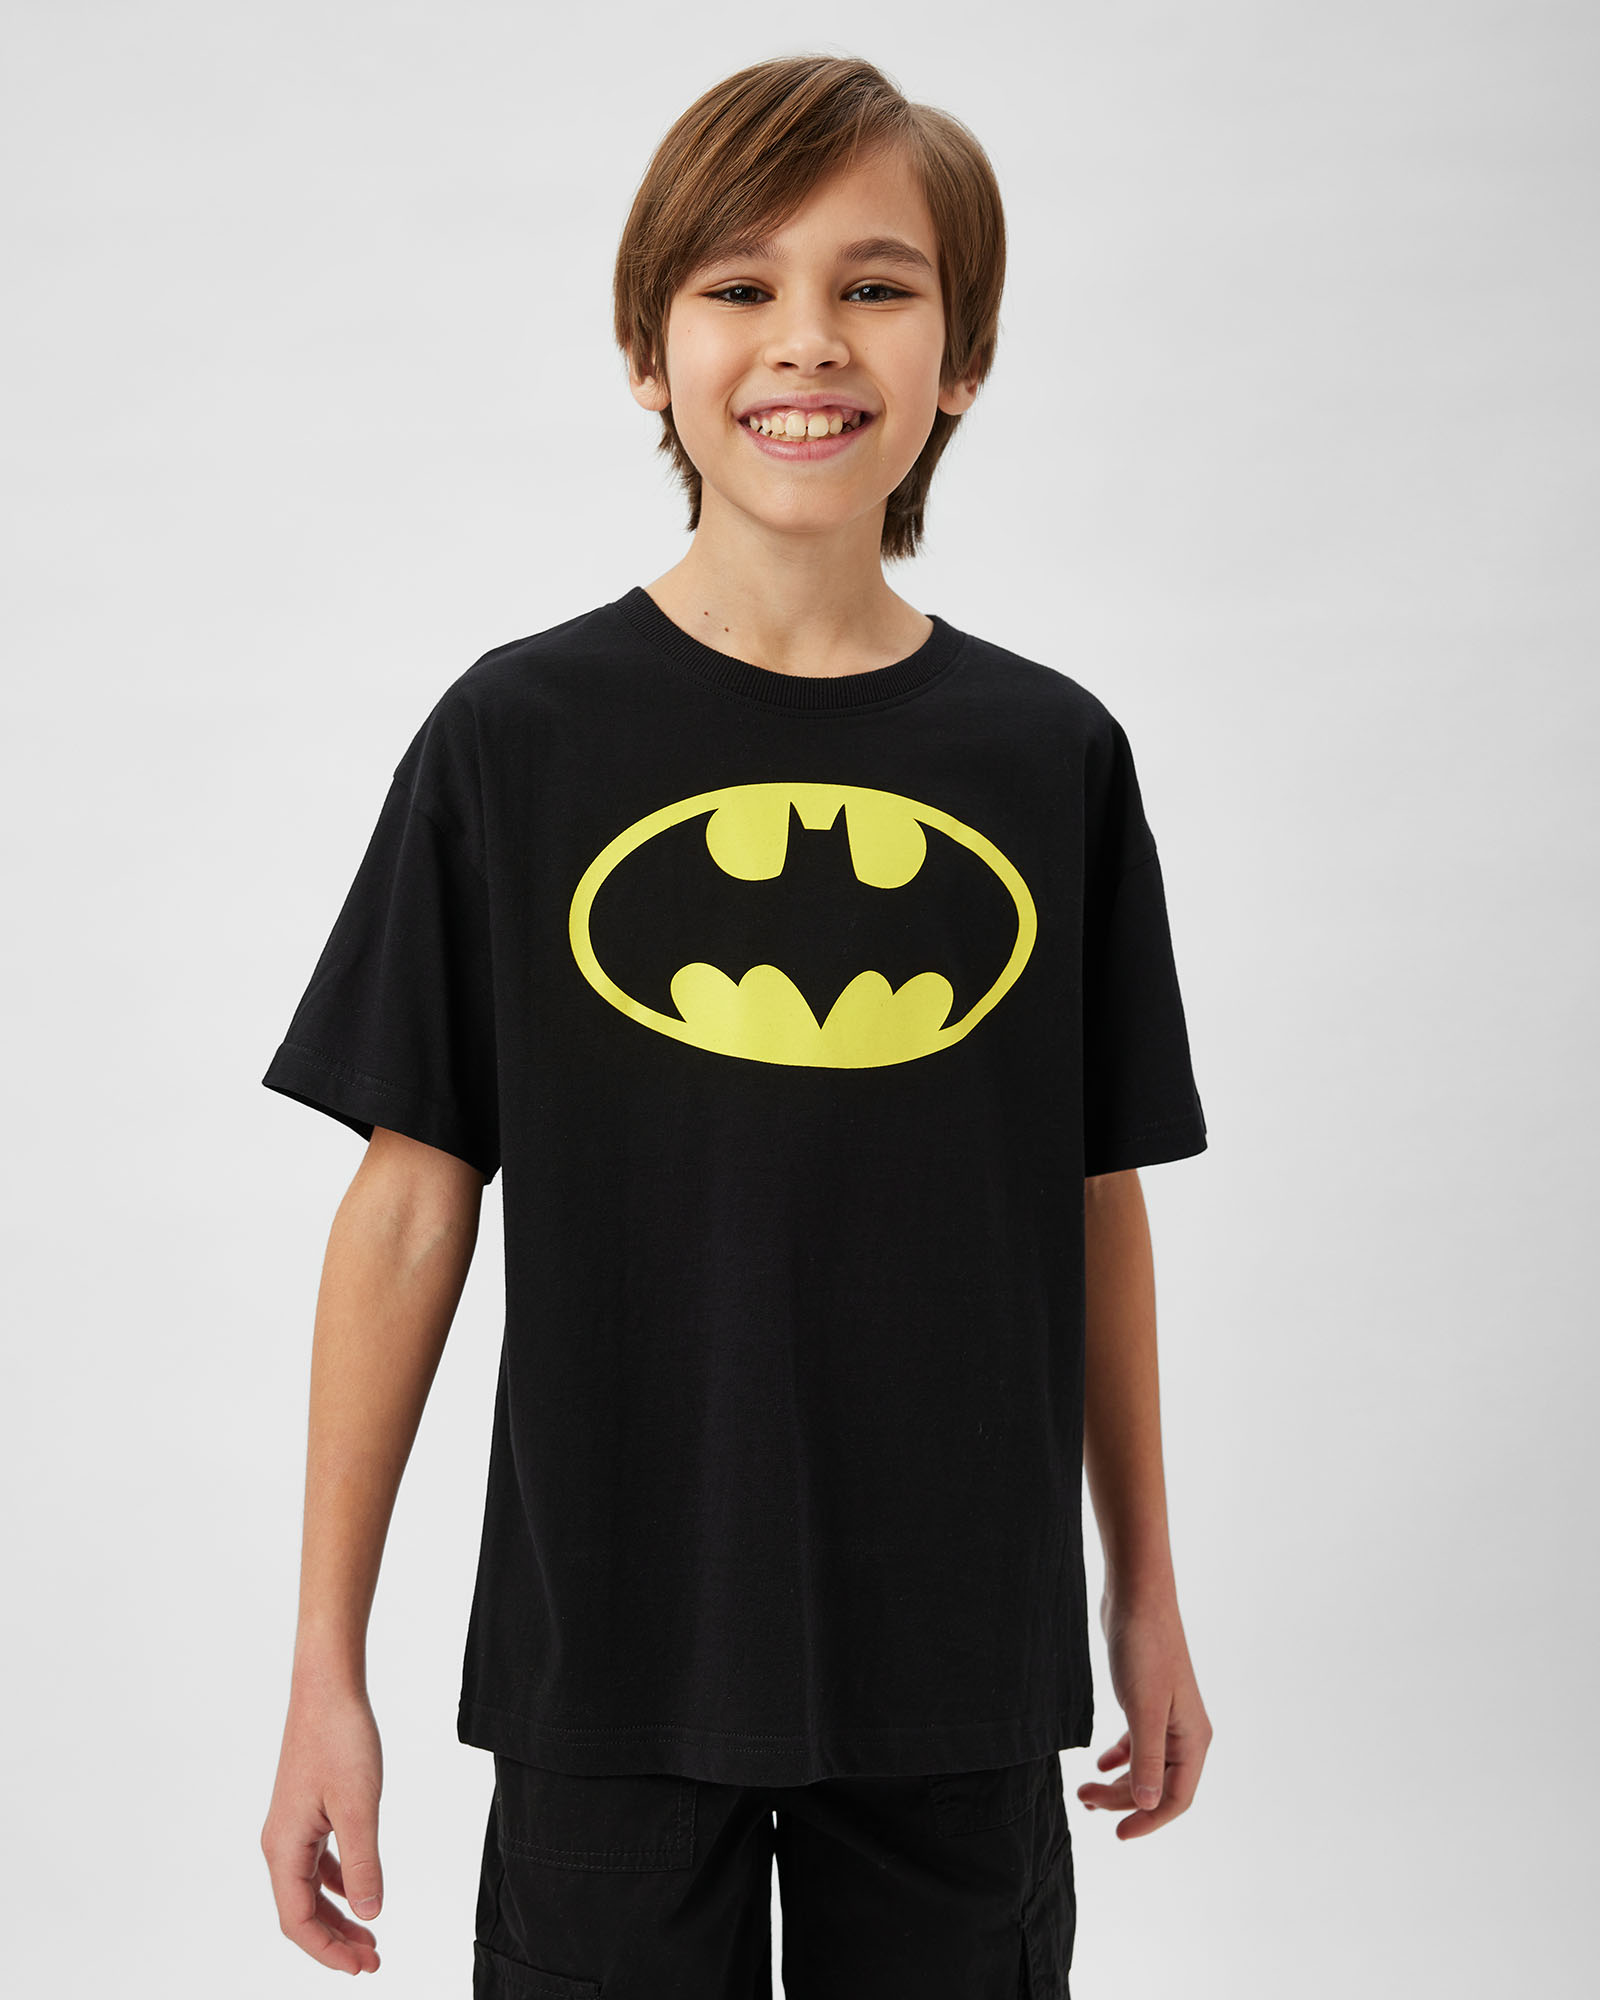 Купить серо-синий костюм Бэтмена для мальчика от Батик